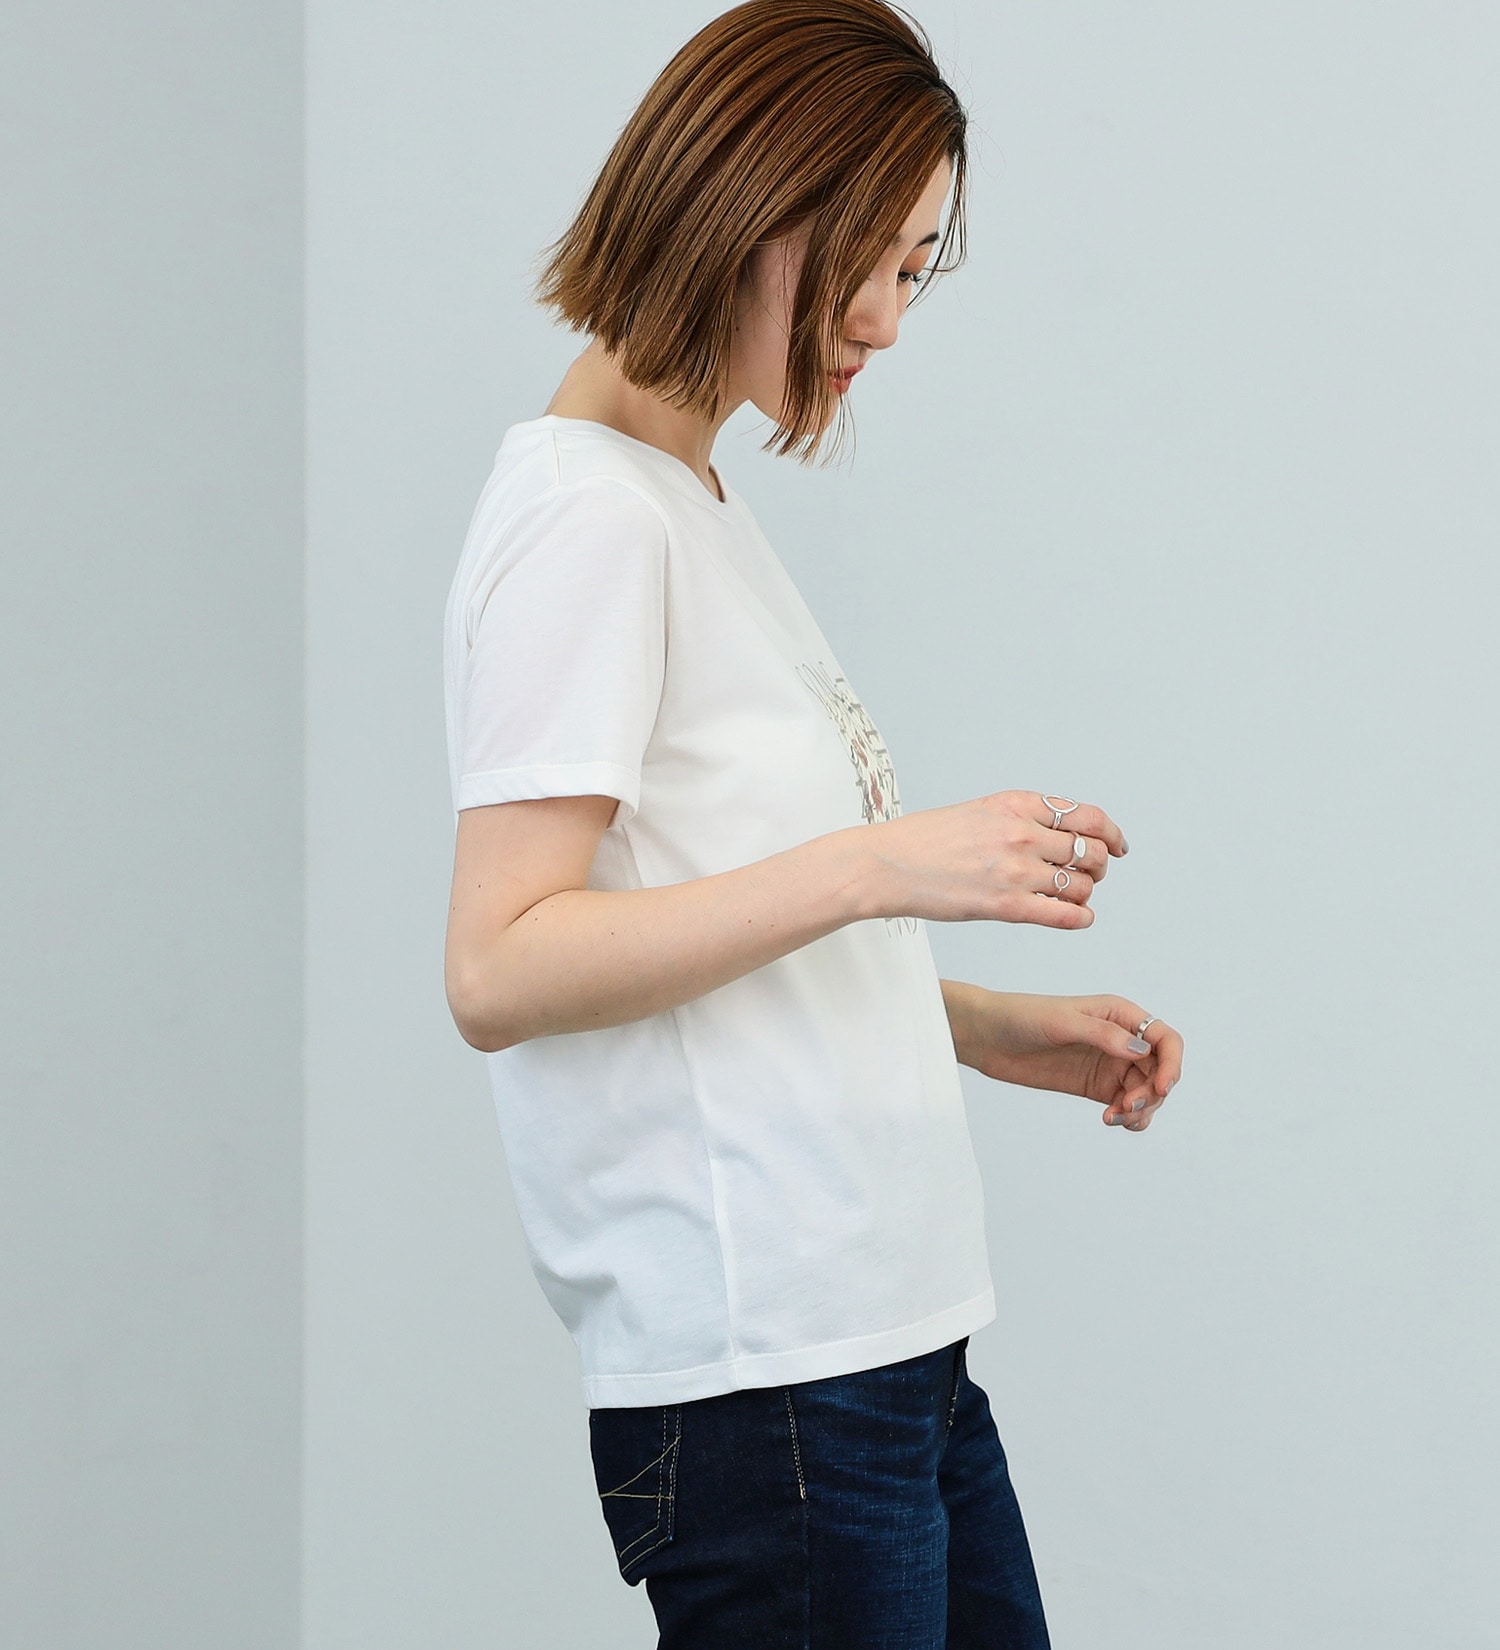 SOMETHING(サムシング)のSOMETHING フォイルプリントTシャツ【半袖】|トップス/Tシャツ/カットソー/レディース|ホワイト